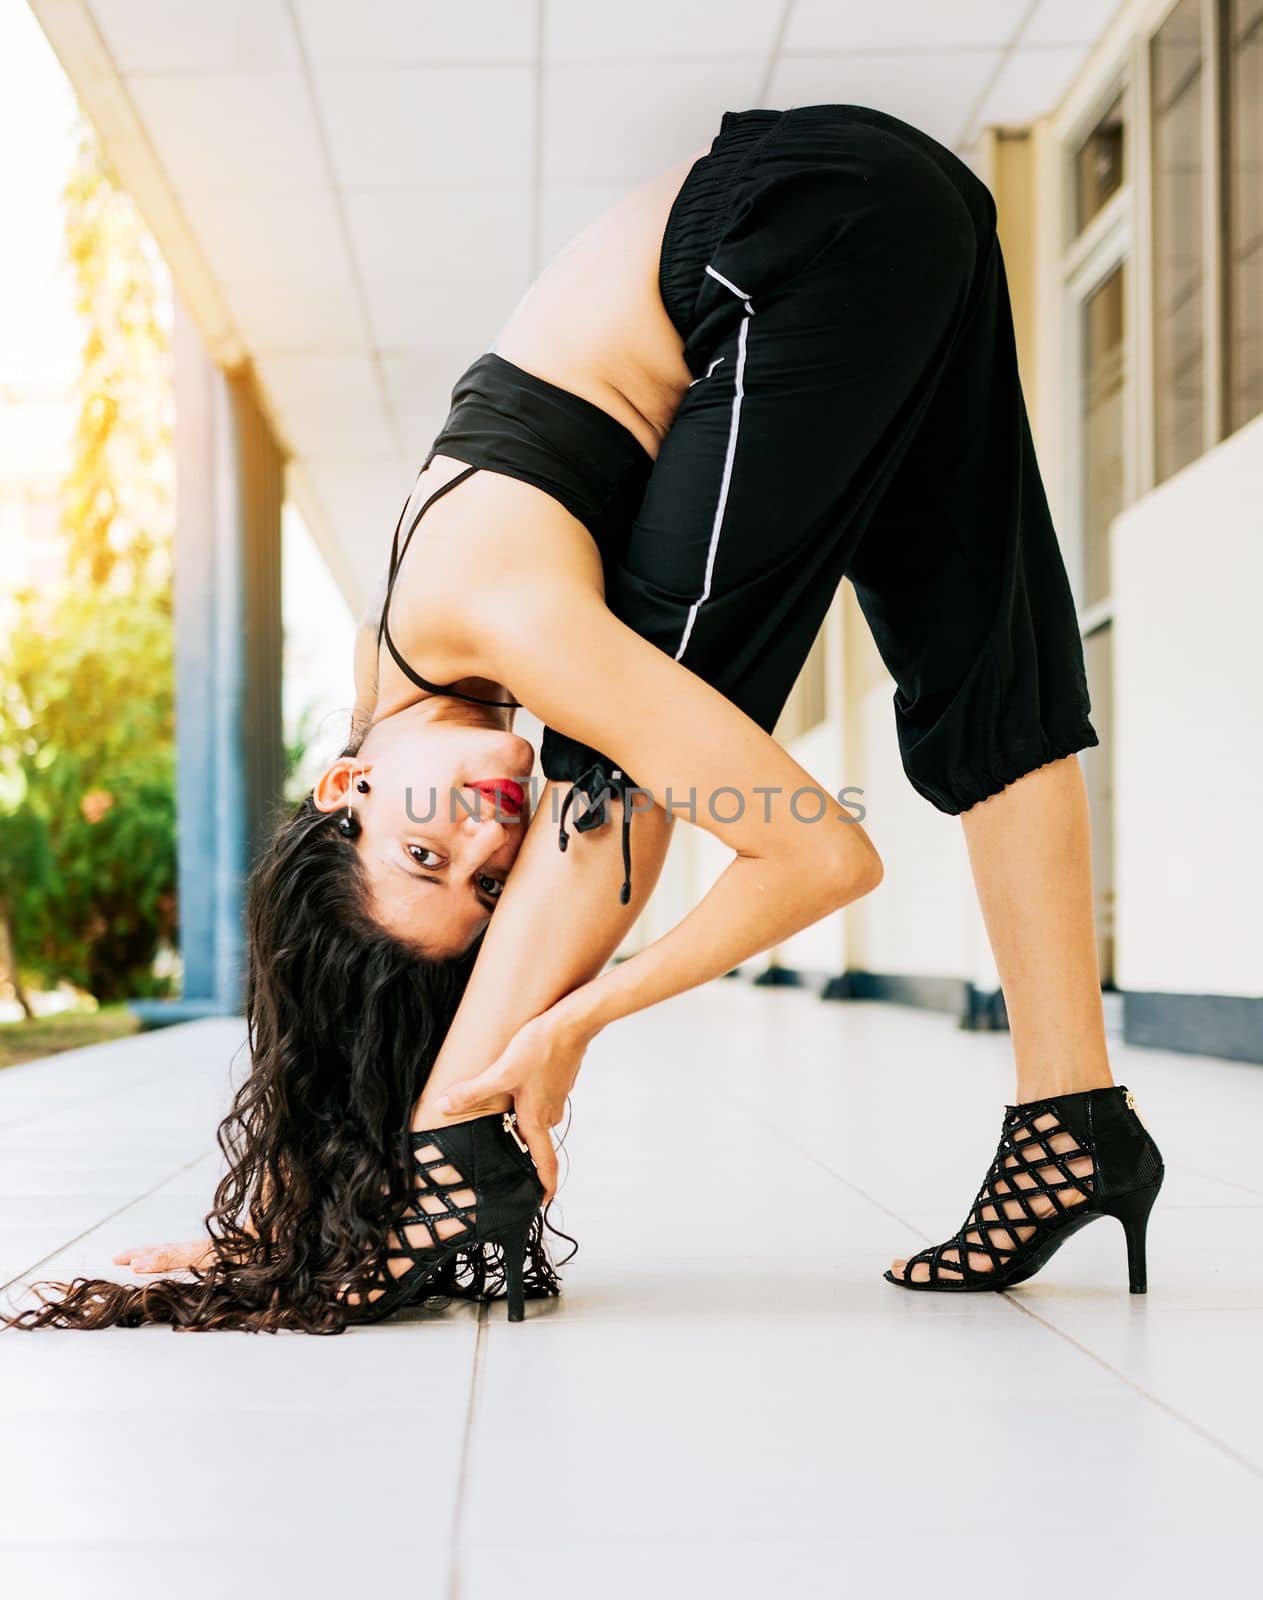 Portrait of dance girl in heels doing gymnastics poses. Woman dancer in heels doing flexibilities poses. Dance young woman doing acrobatics and flexibilities in high heels outdoors